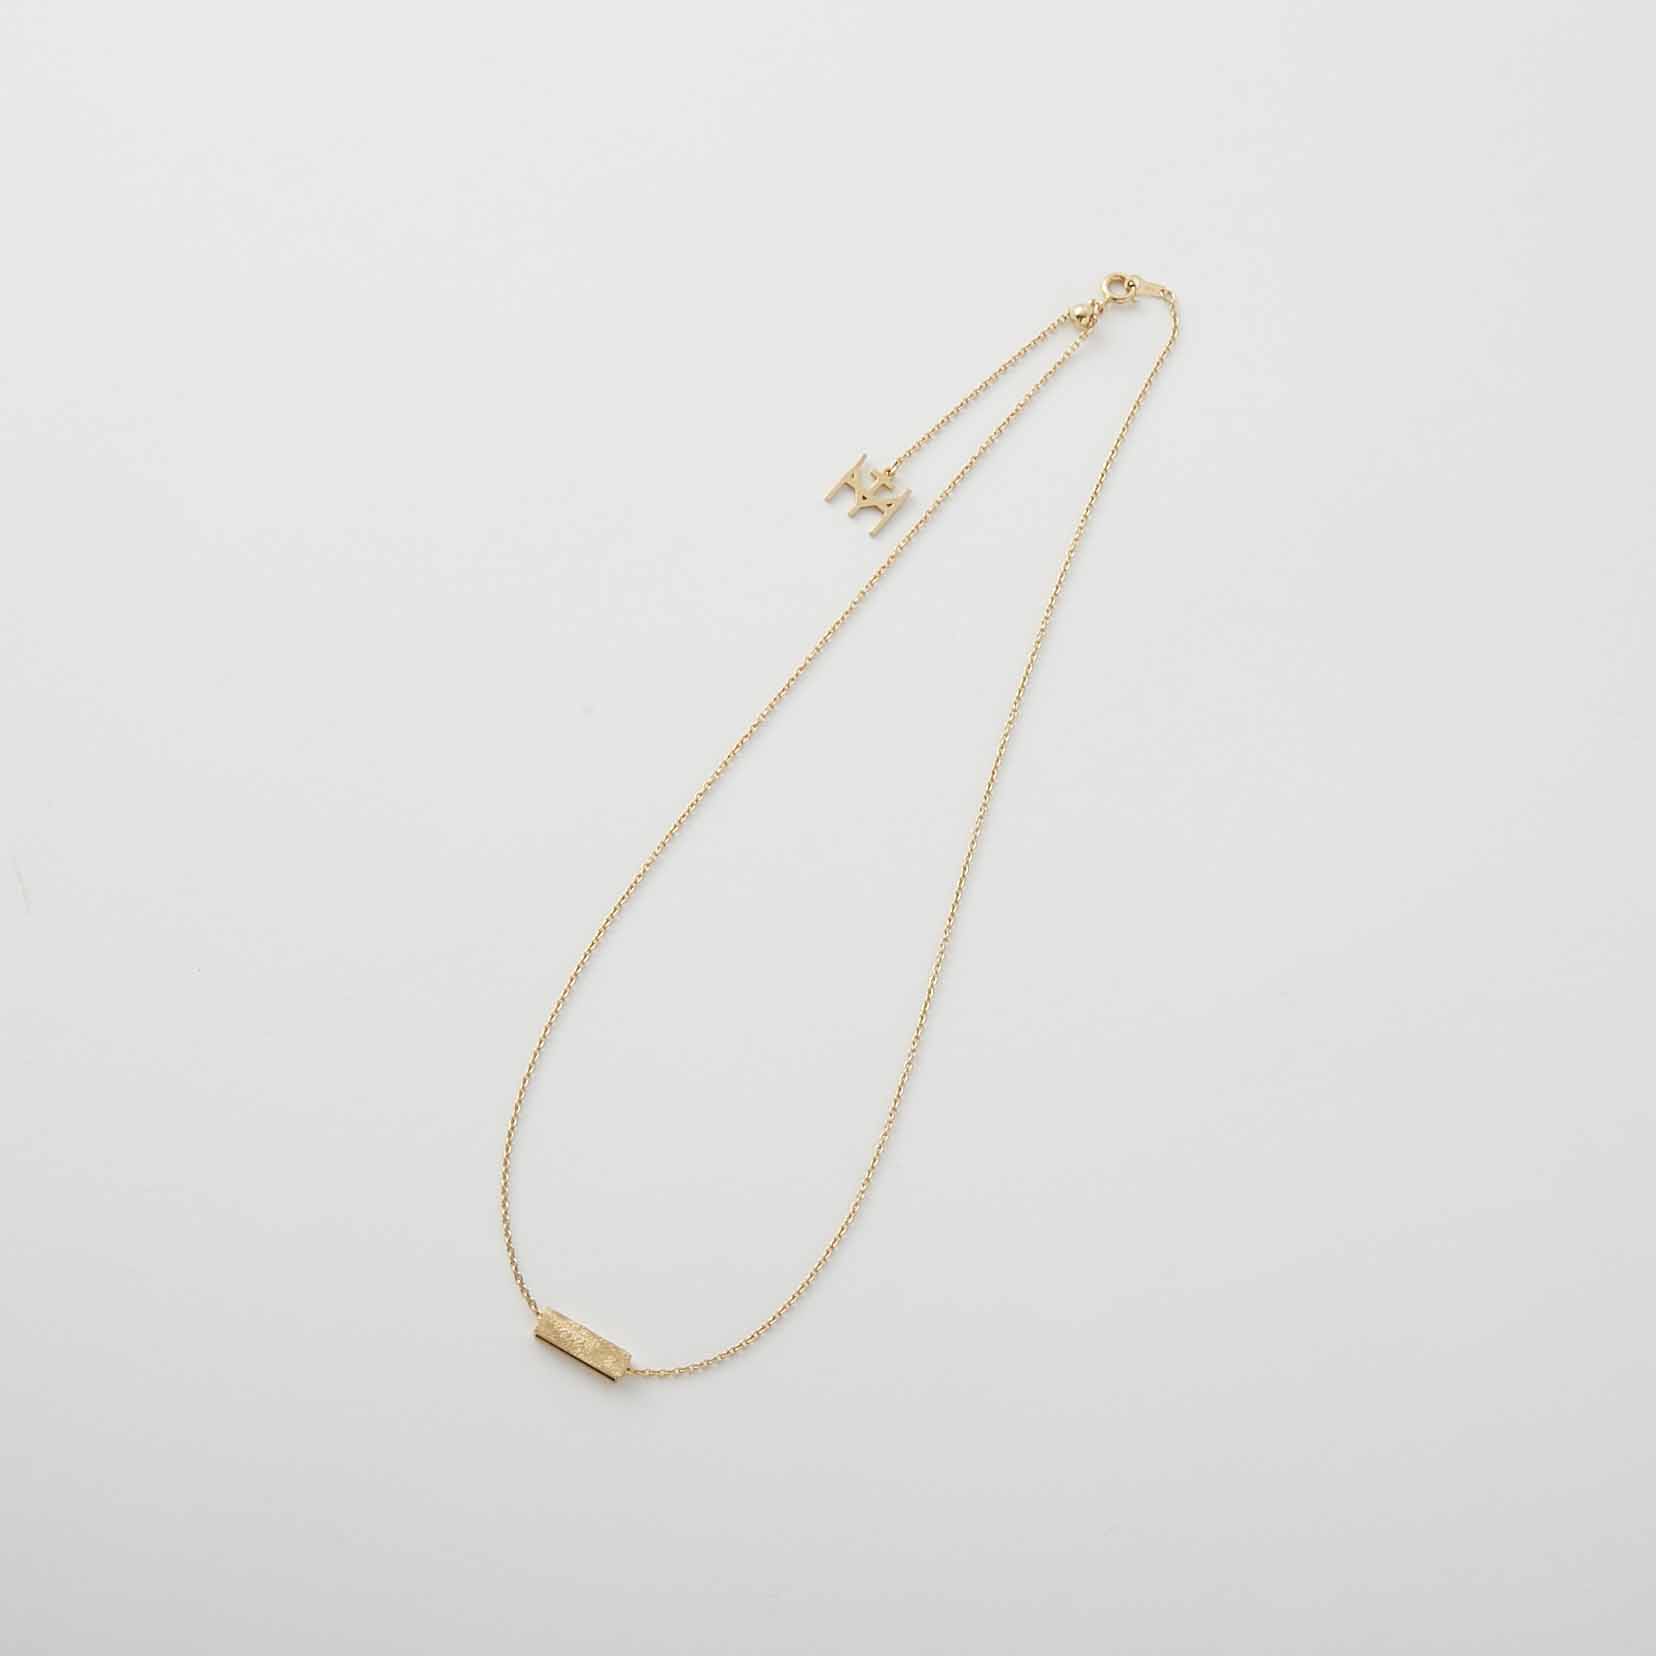 hatsuyume   jewelry & objects/diamond dust necklace